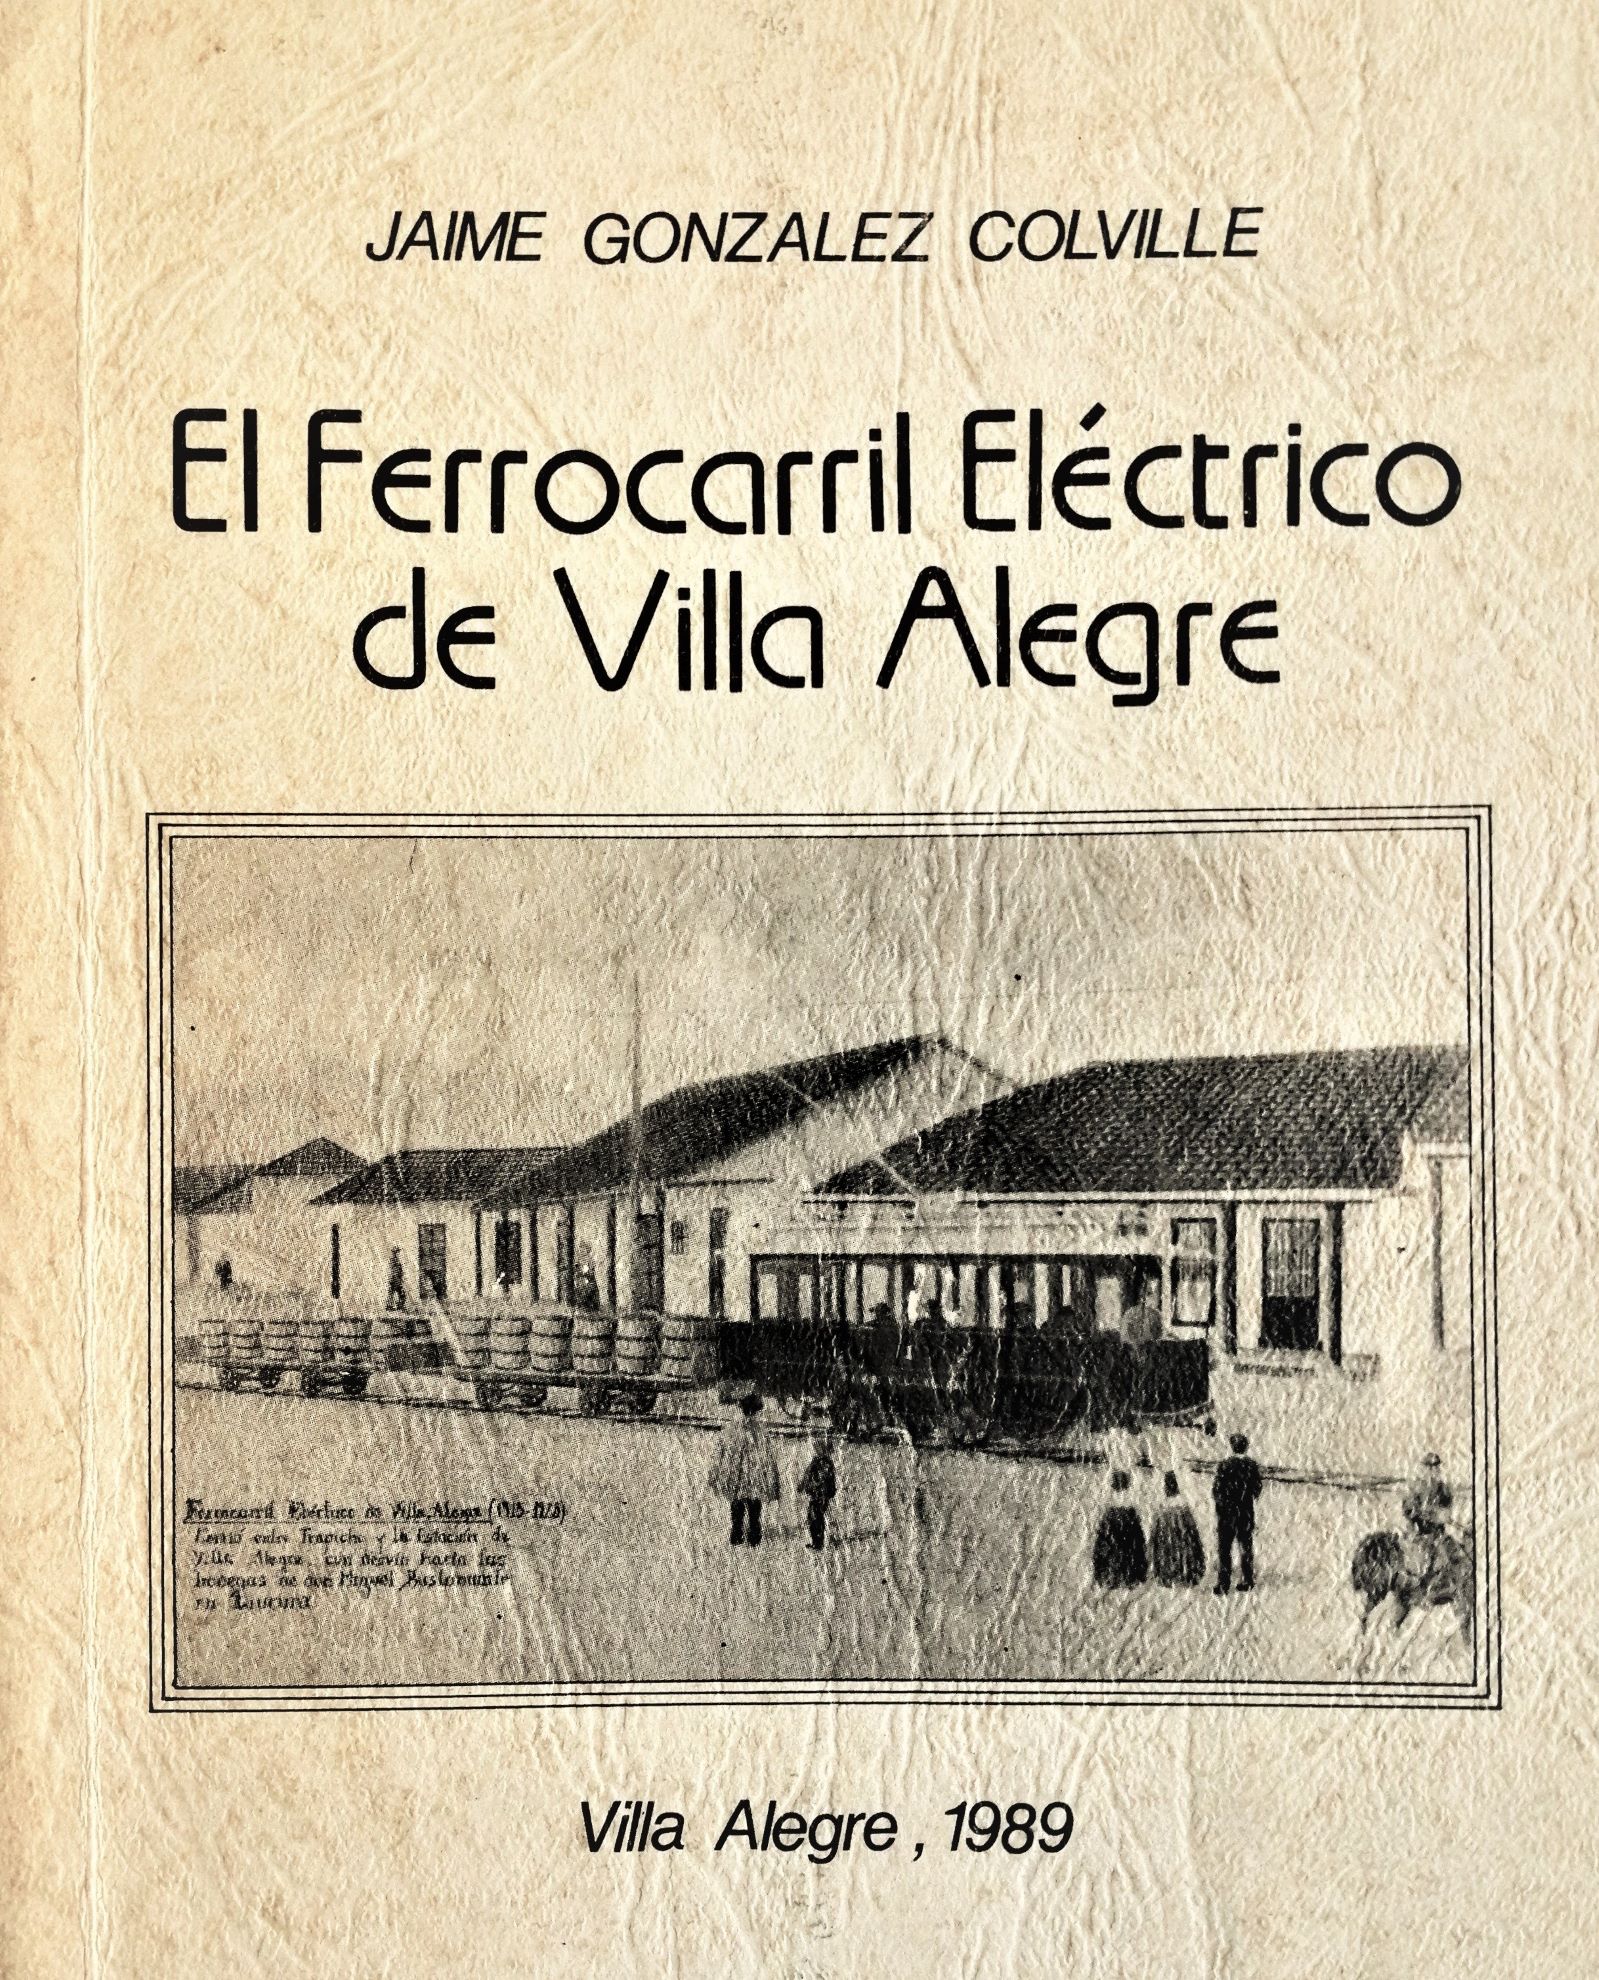 Jaime González Colville - El ferrocarril eléctrico de Villa Alegre